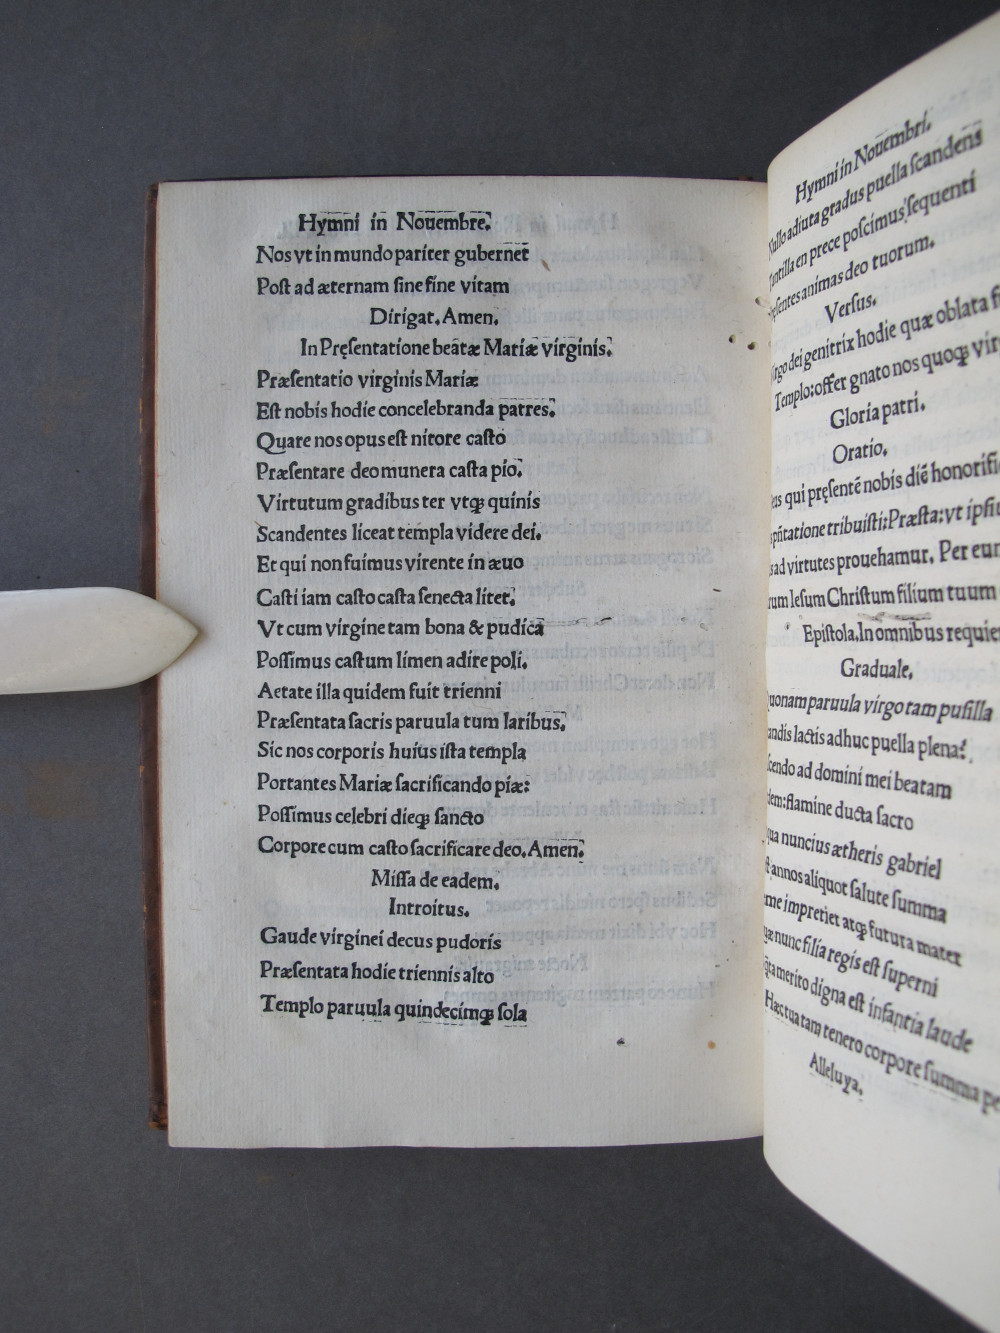 Folio 58 verso